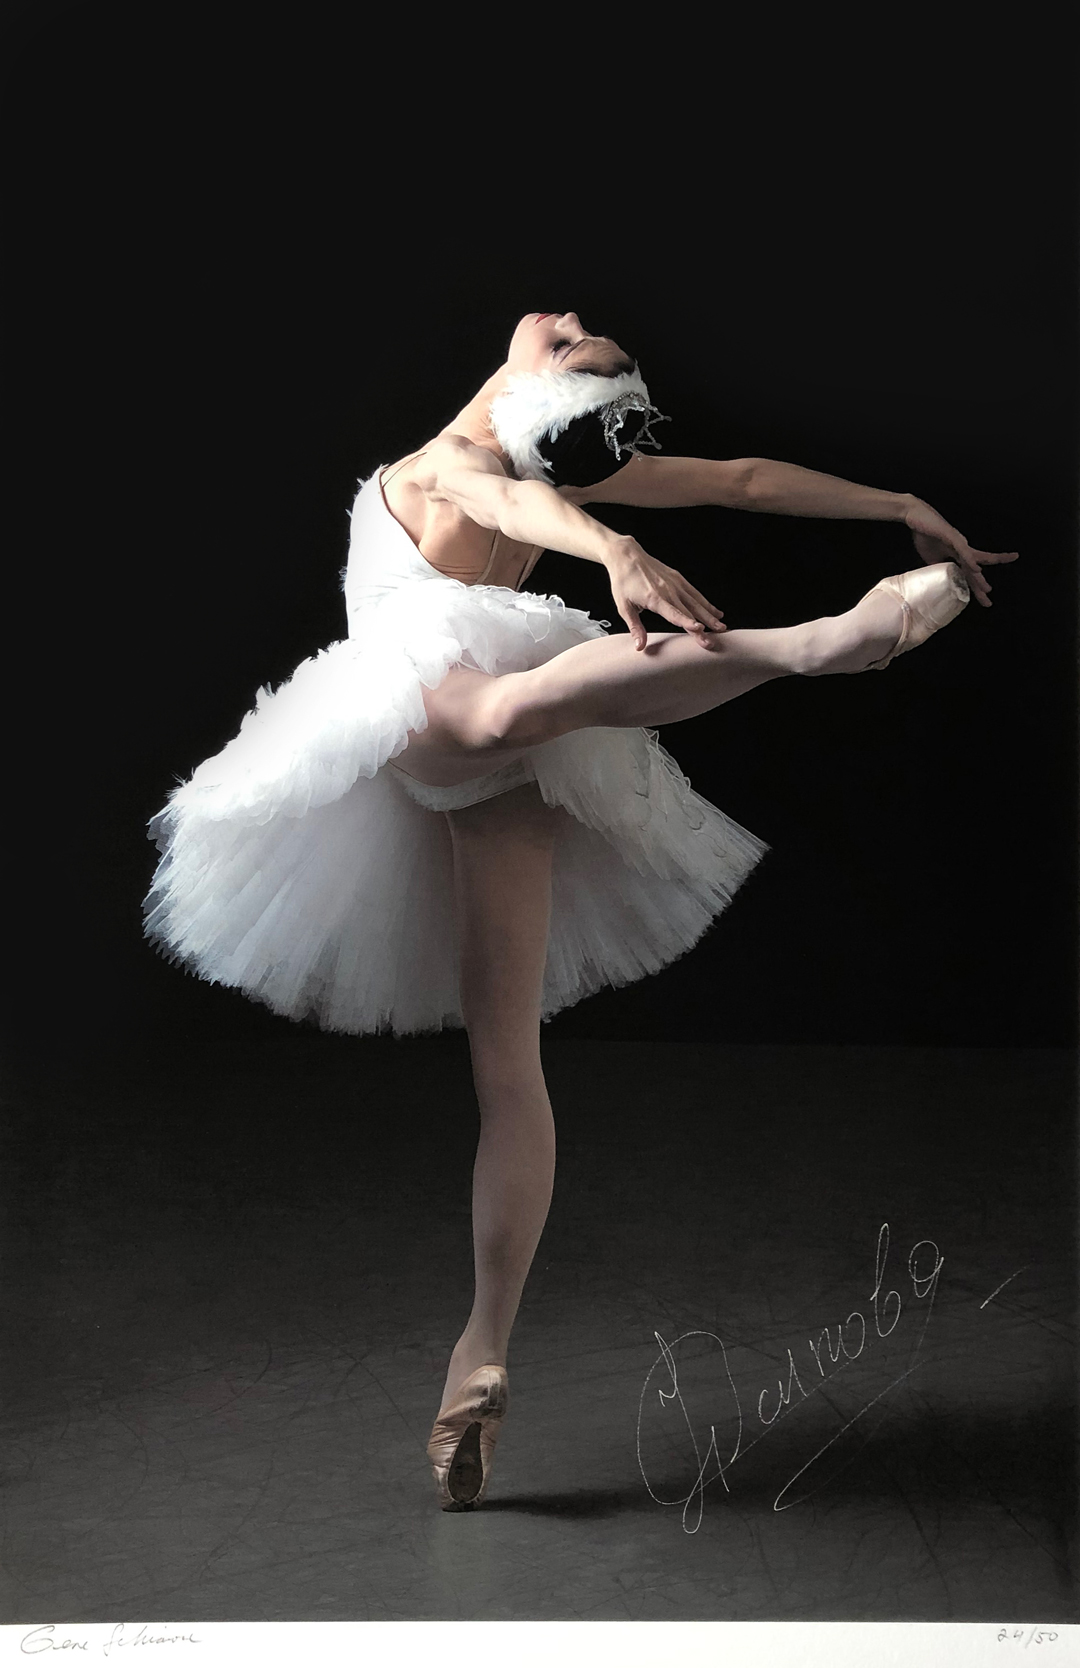 Schiavone - Professional Ballet Photography